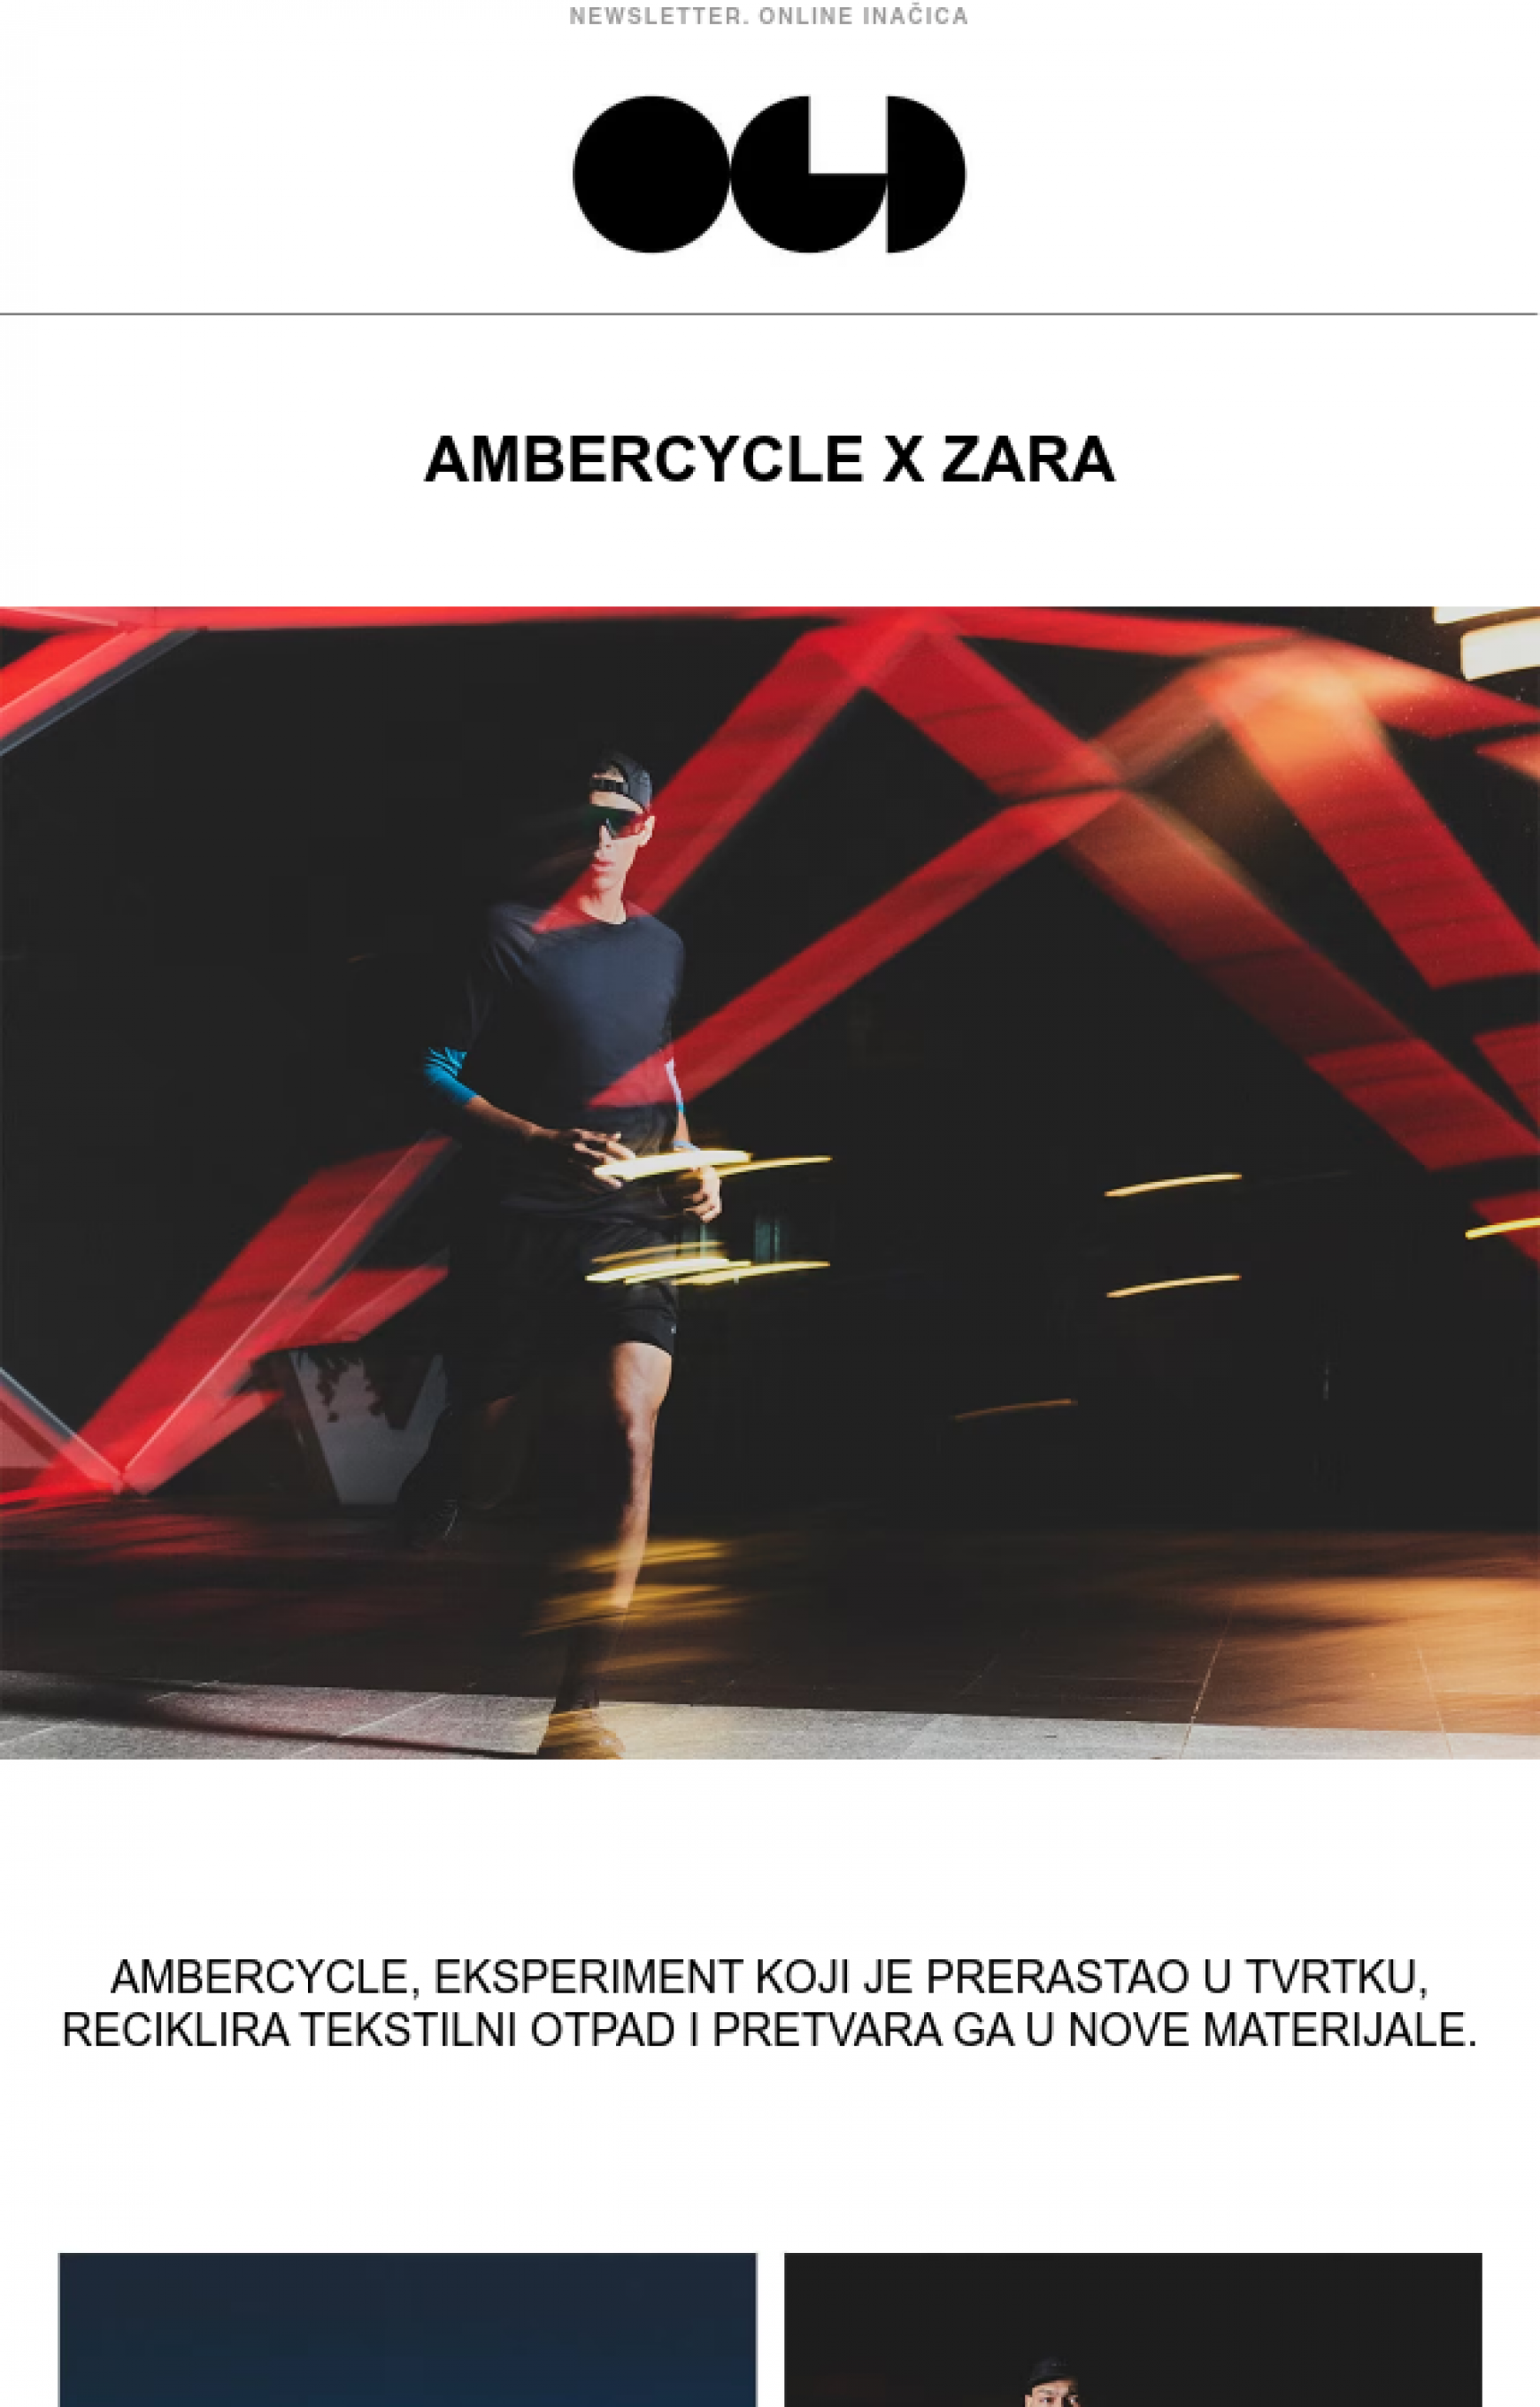 zara - ZARA - Sustainability Innovation Hub: AMBERCYCLE X ZARA